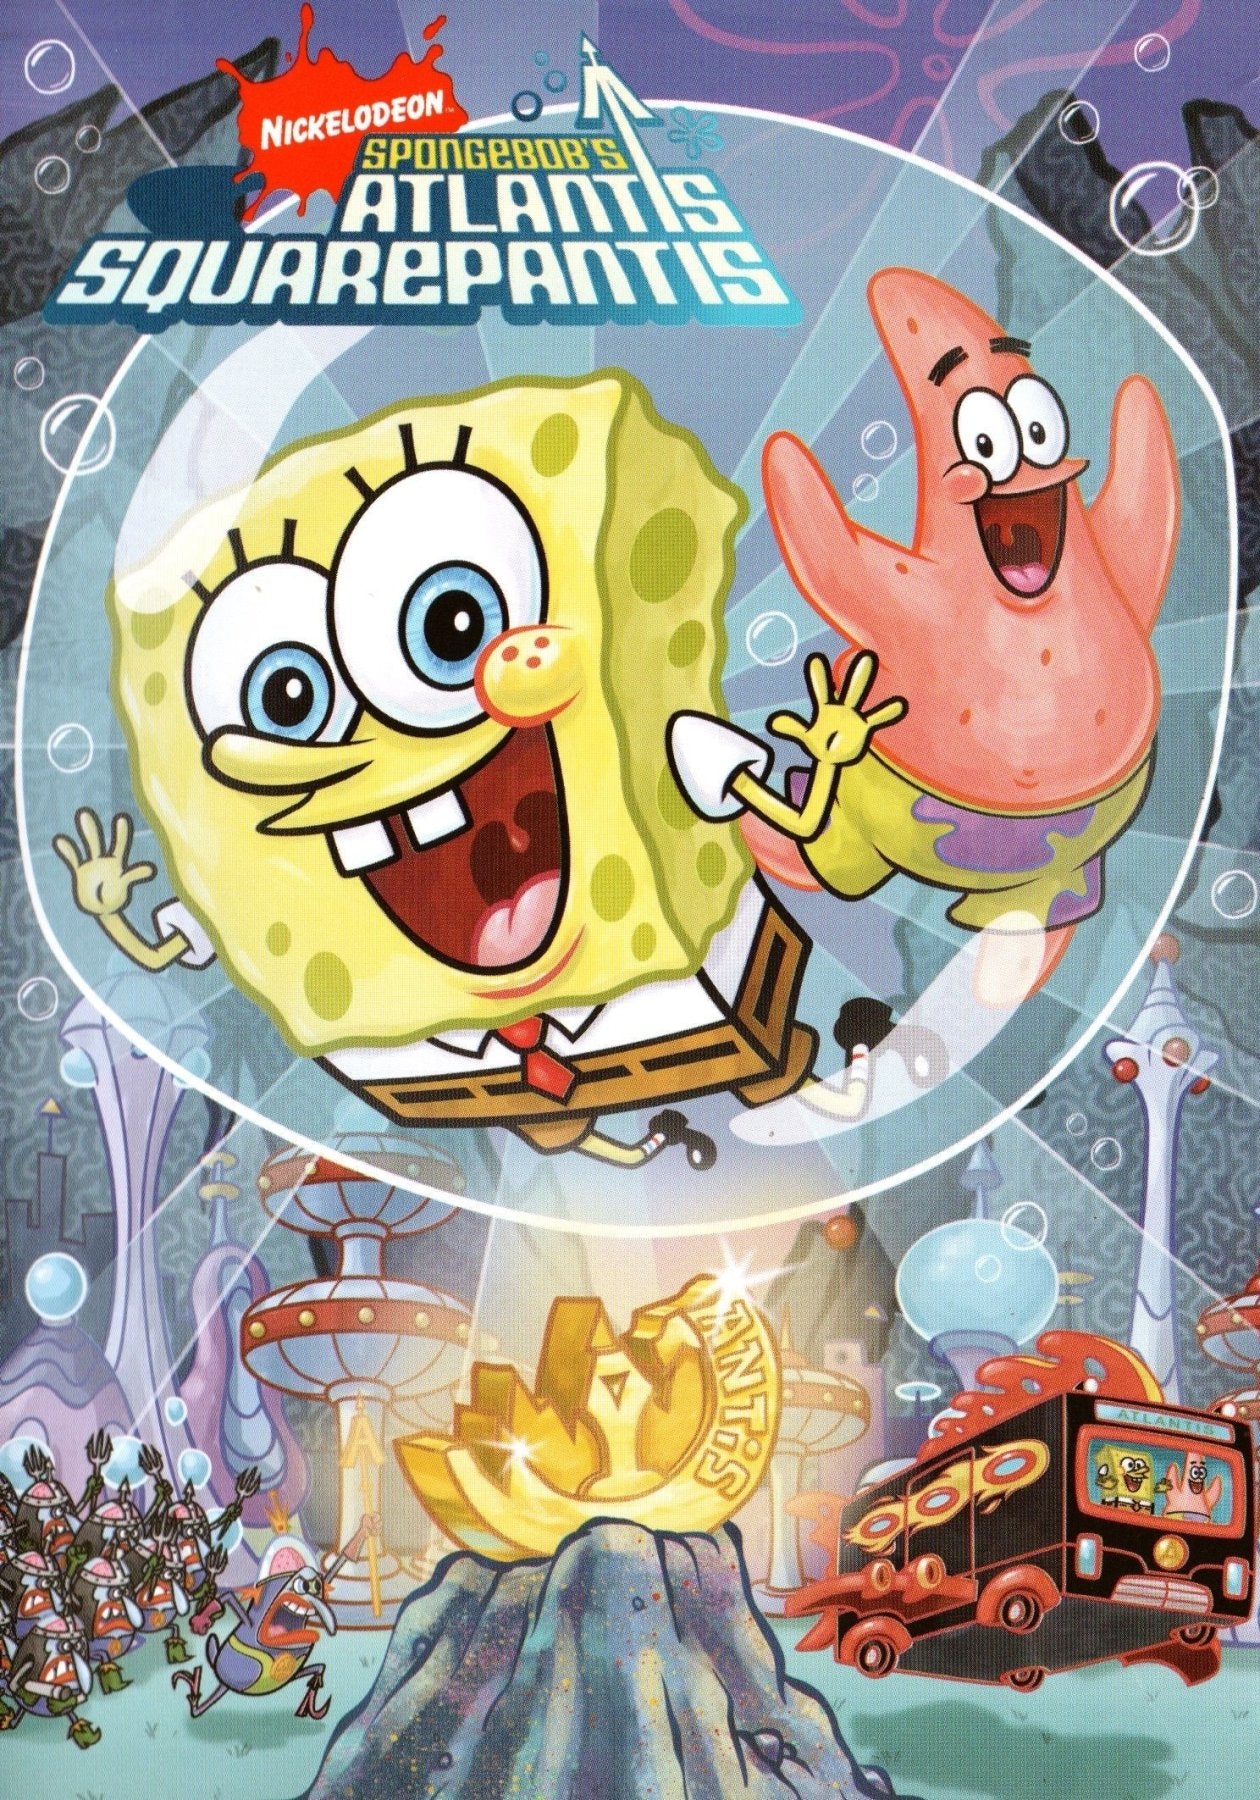 SpongeBob SquarePants: SpongeBob's Atlantis SquarePantis - DVD - Retro Island Gaming